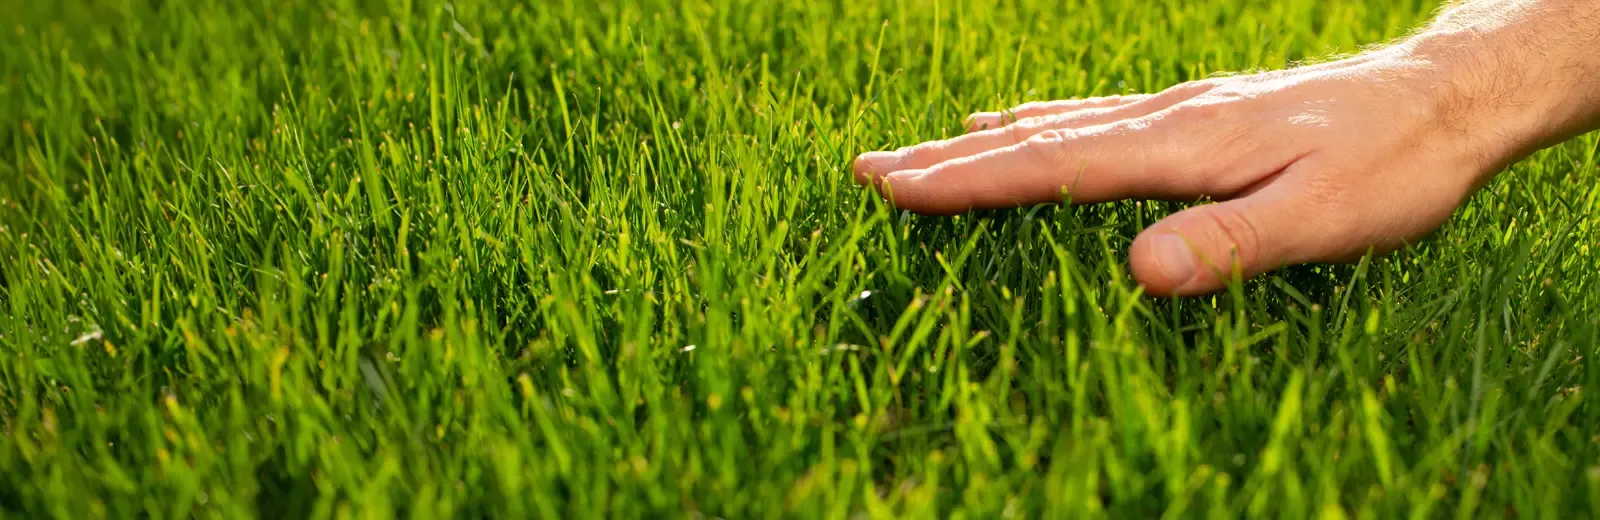 touching green healthy grass